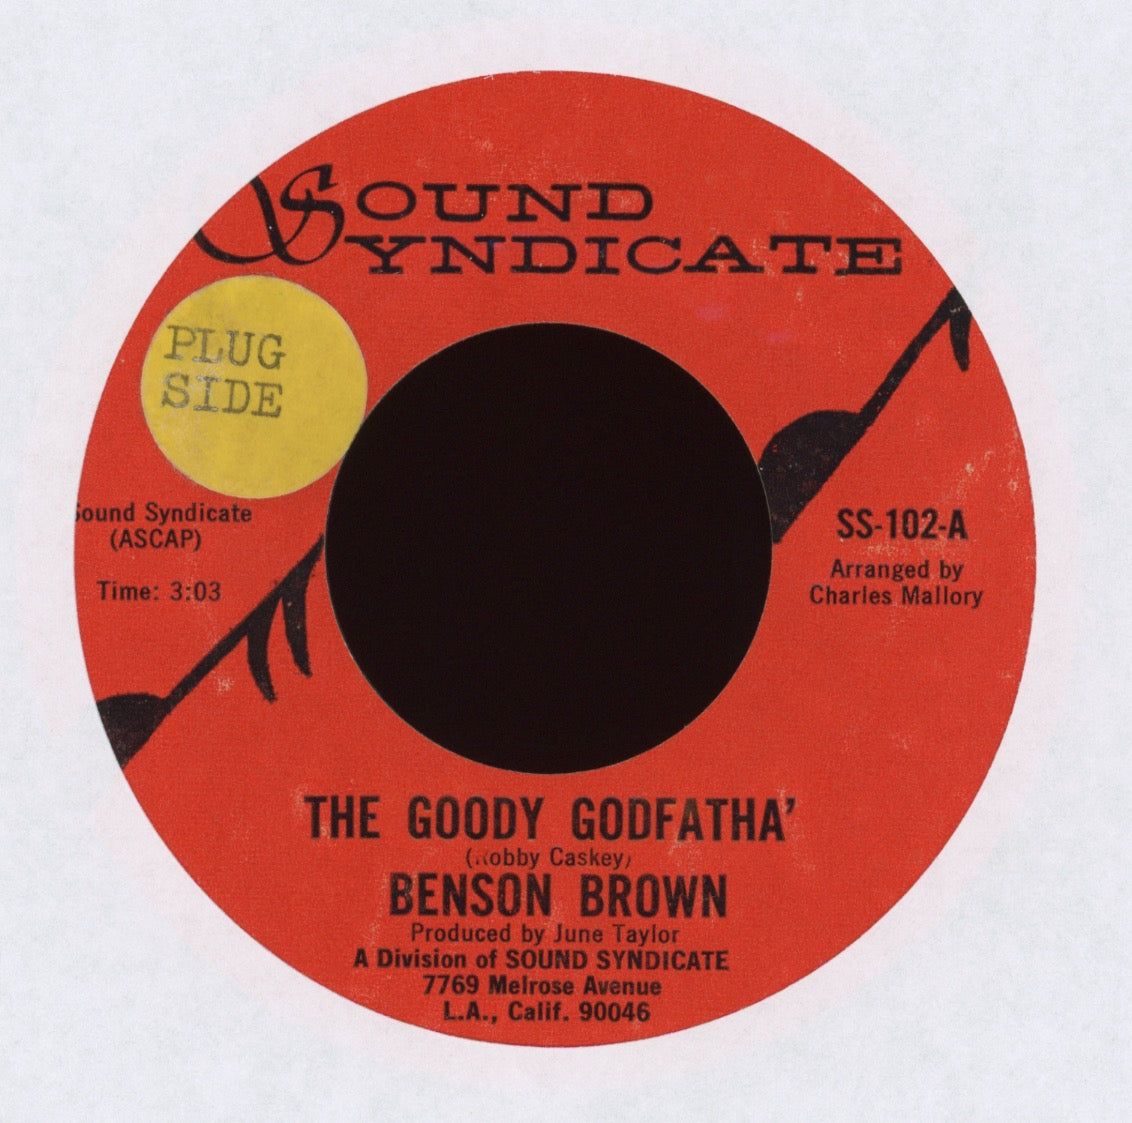 Benson Brown - The Goody Godfatha on Sound Syndicate